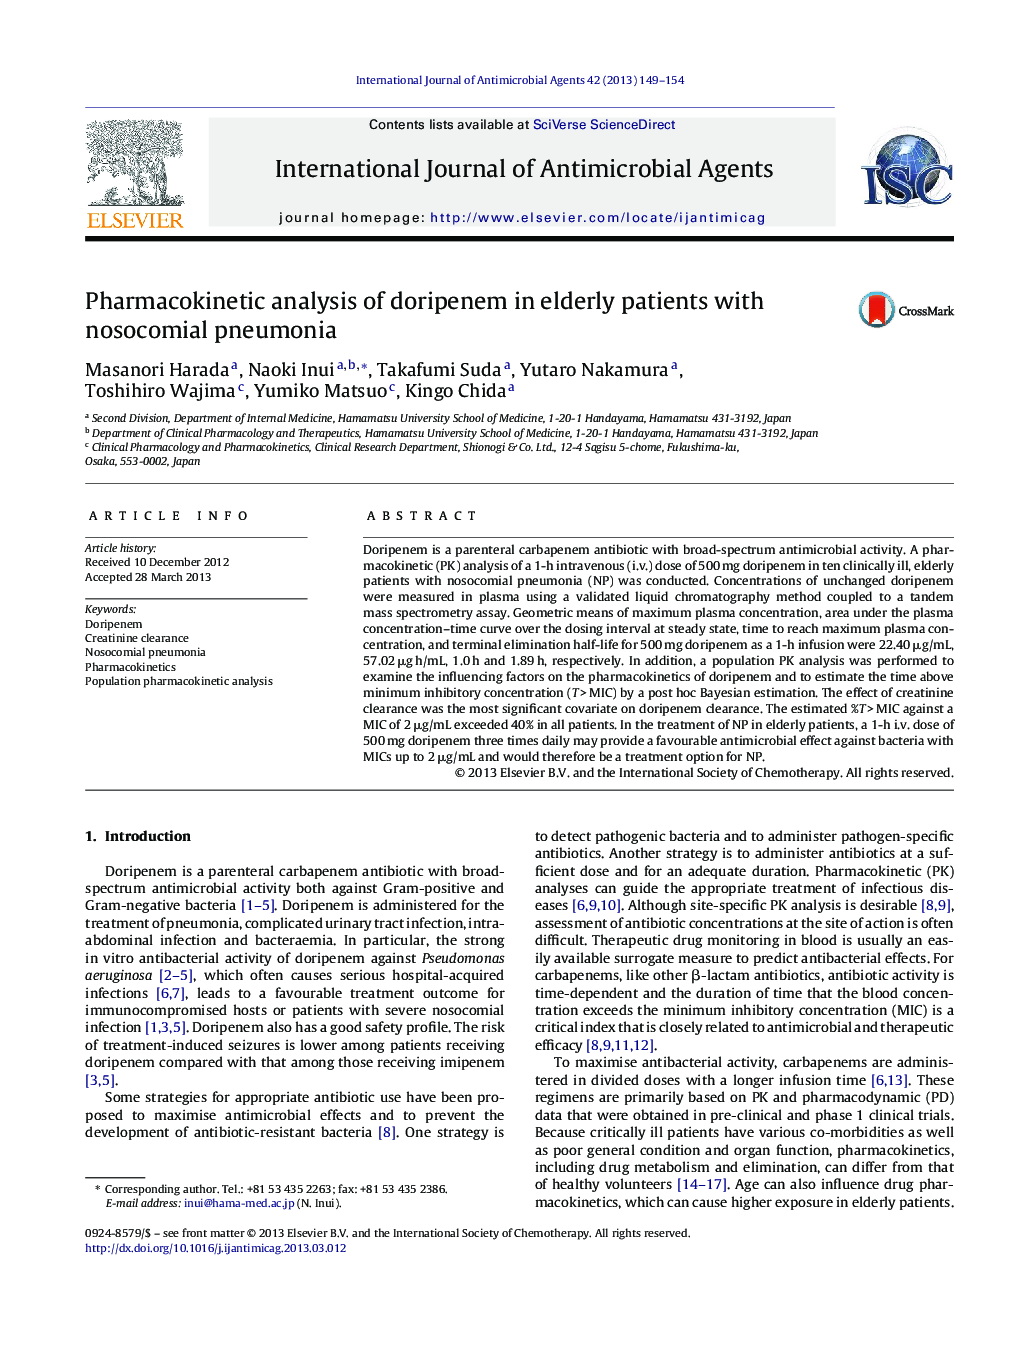 Pharmacokinetic analysis of doripenem in elderly patients with nosocomial pneumonia